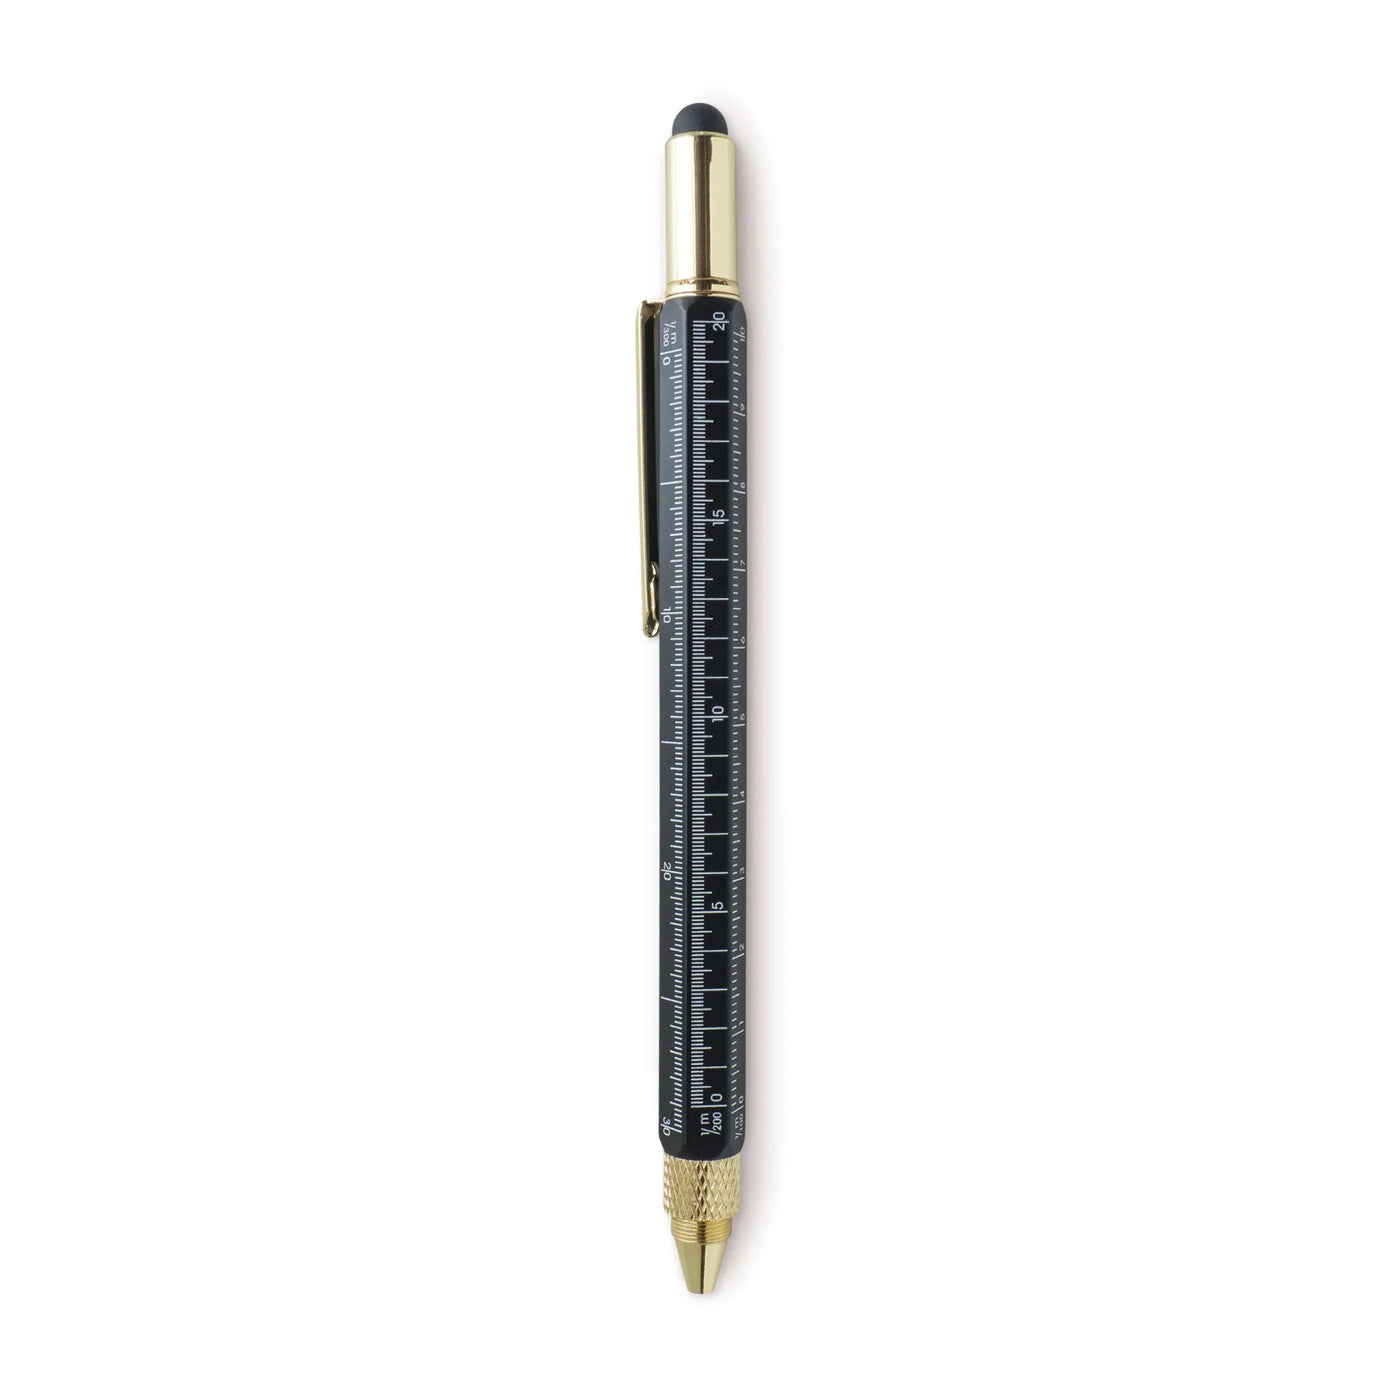 Standard Issue Multi-Tool Pen